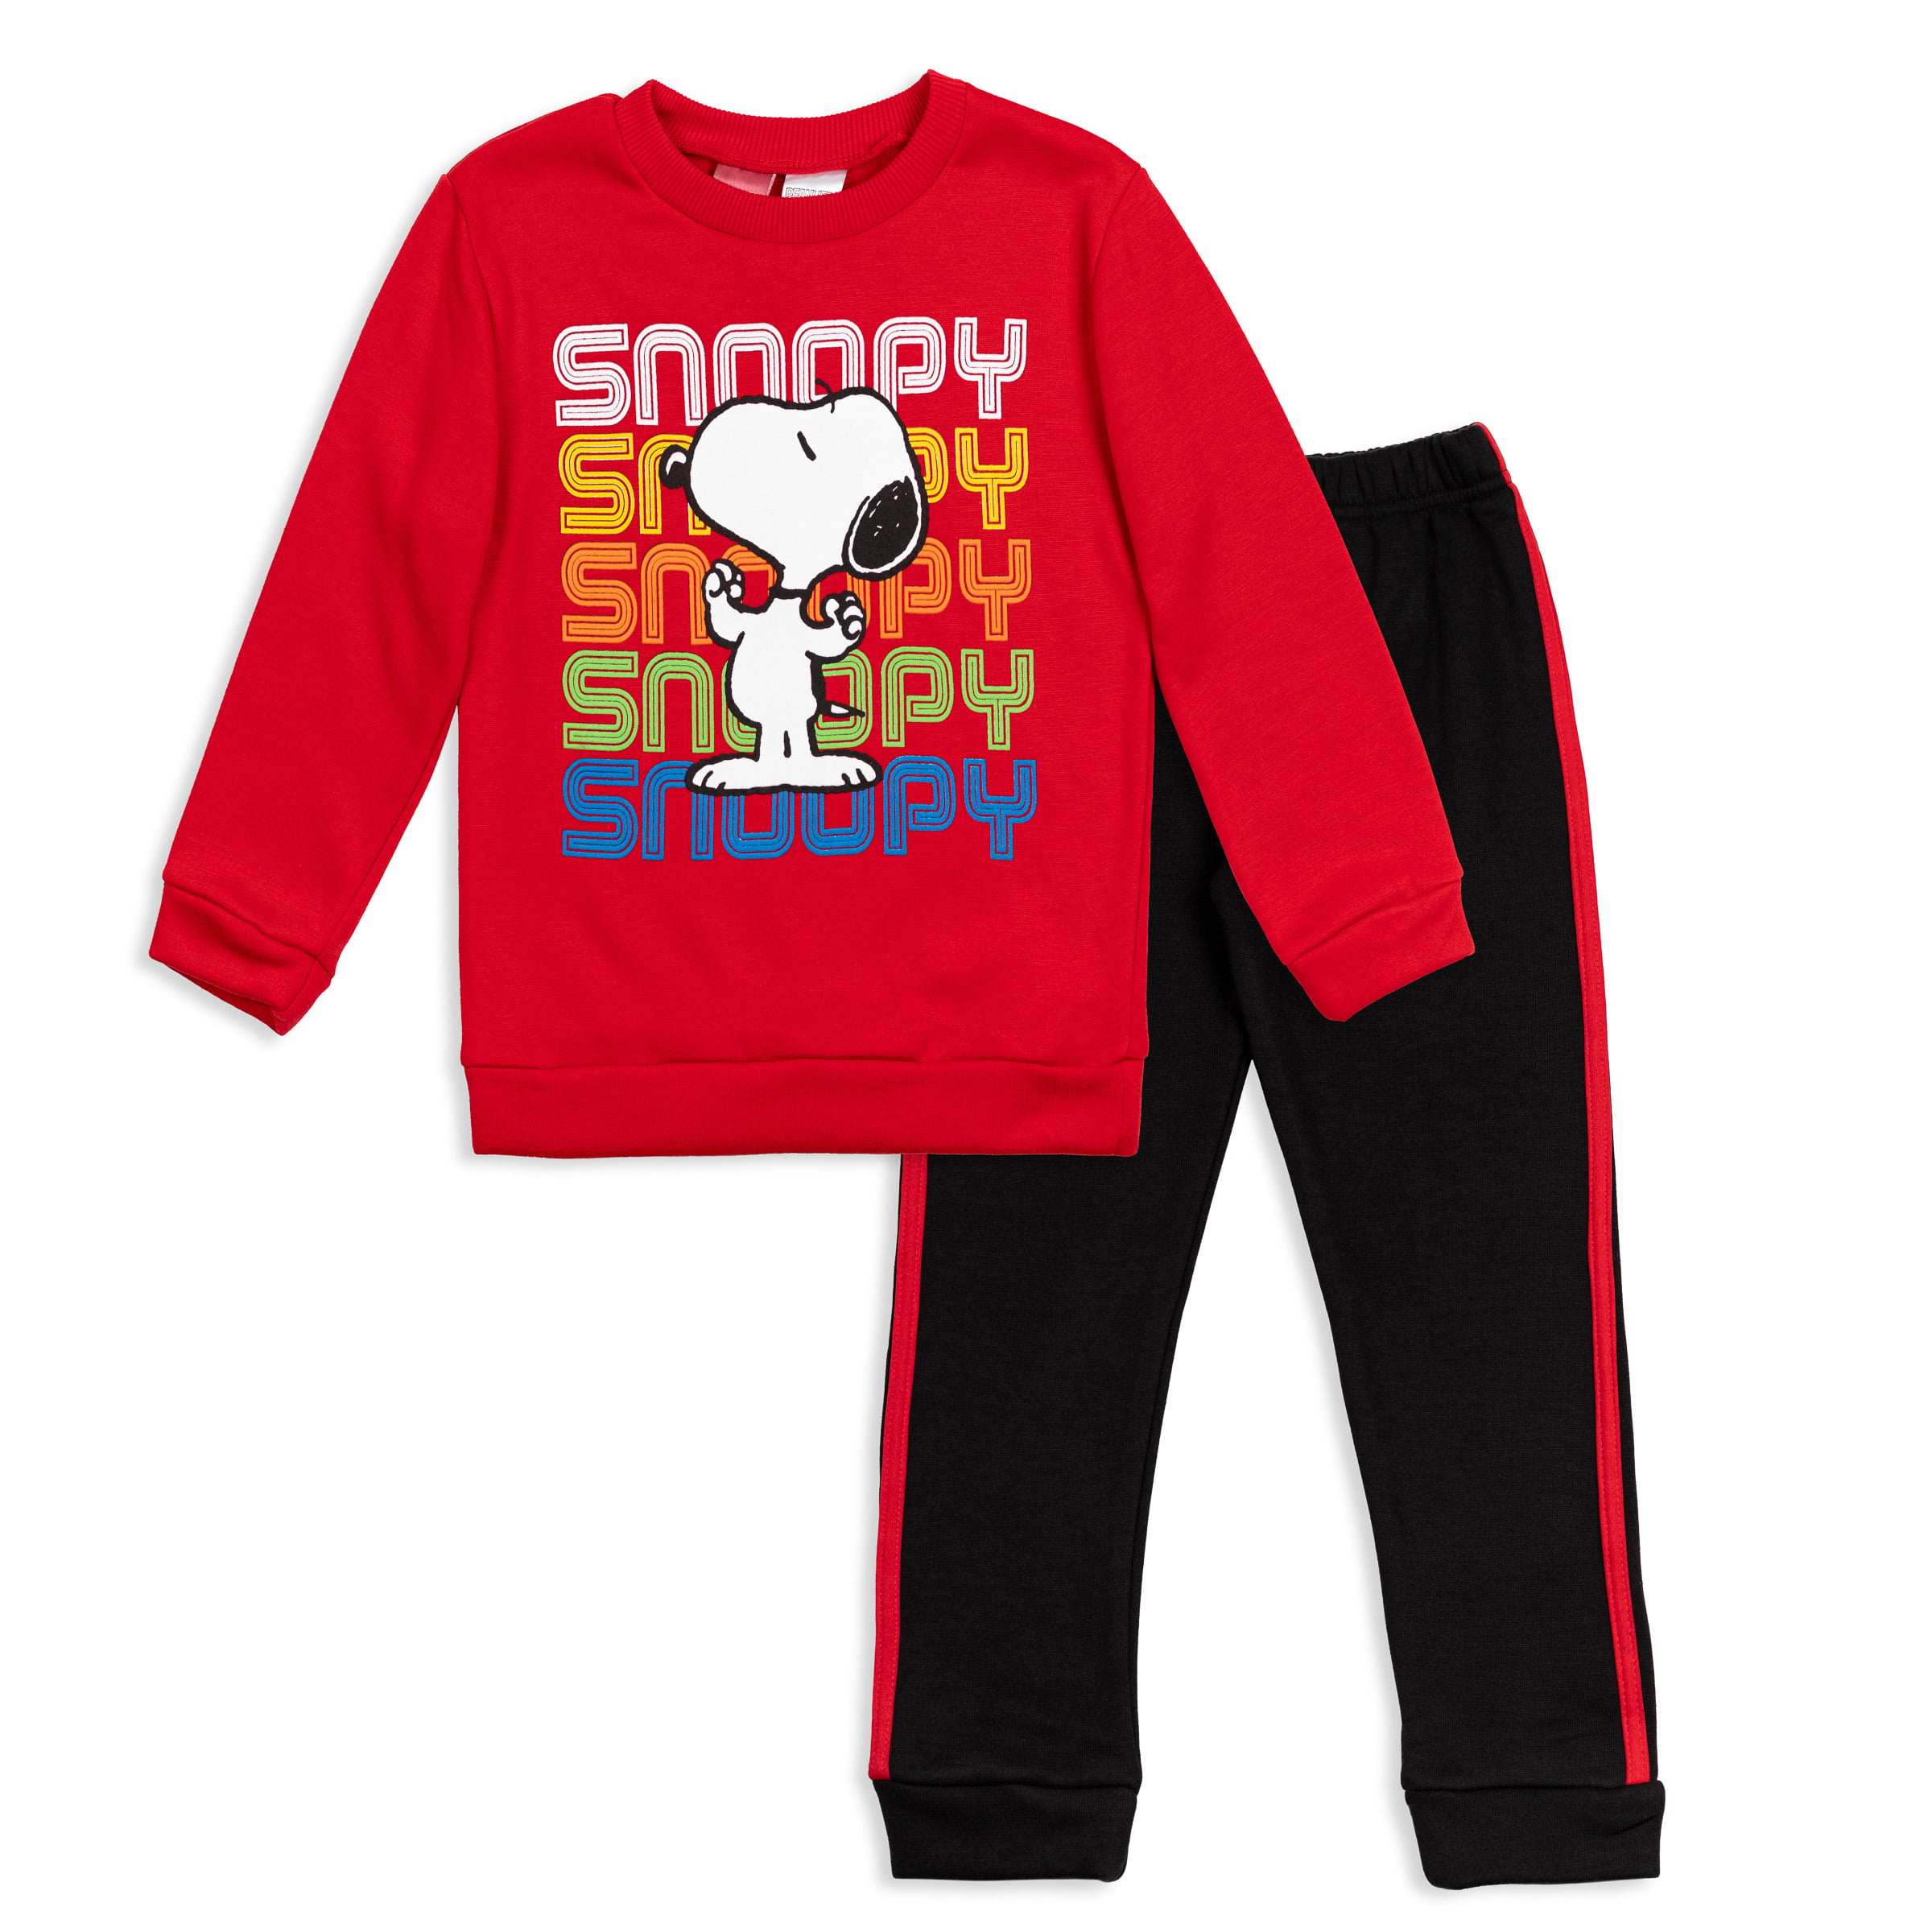 Workwear Jumper Sweater Fries Before Guys Personalised Printed Sweatshirt Any Name Text Sweatshirt Free Delivery,